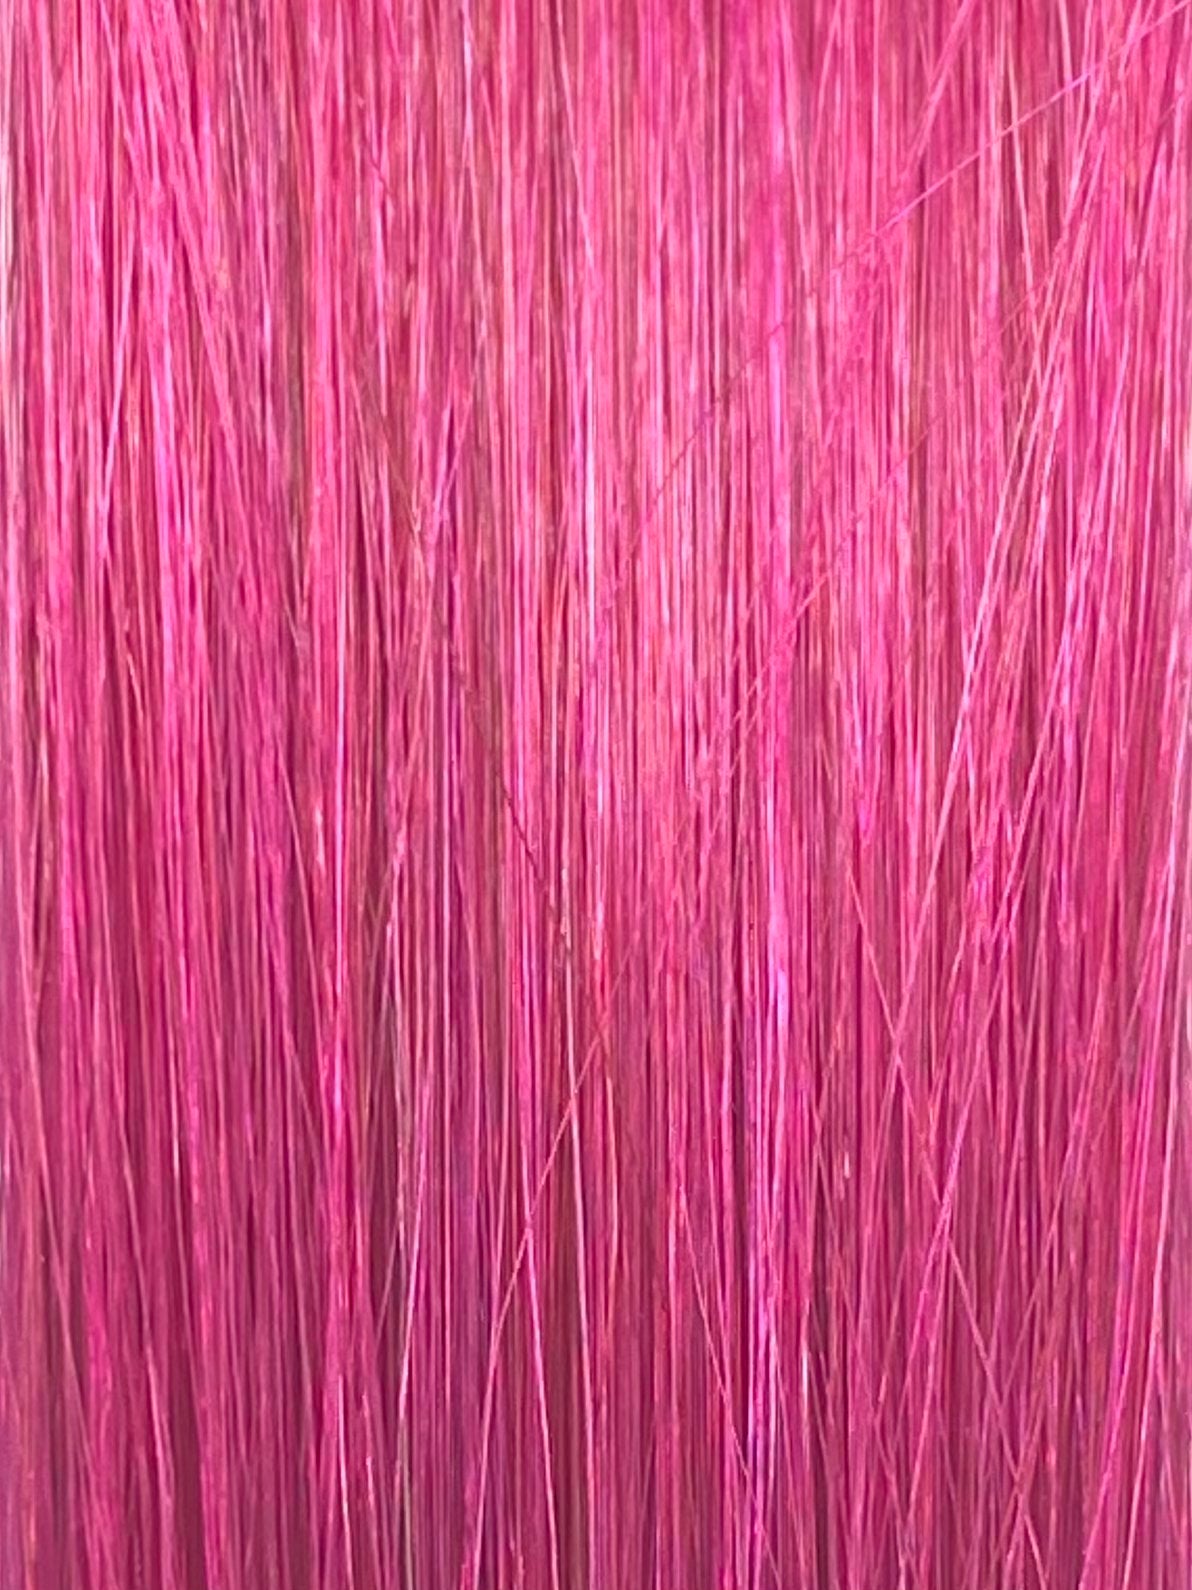 Tape in hair extensions #Fuchsia - 50cm/ 20 inches - Fuchsia Tape Euro So Cap 